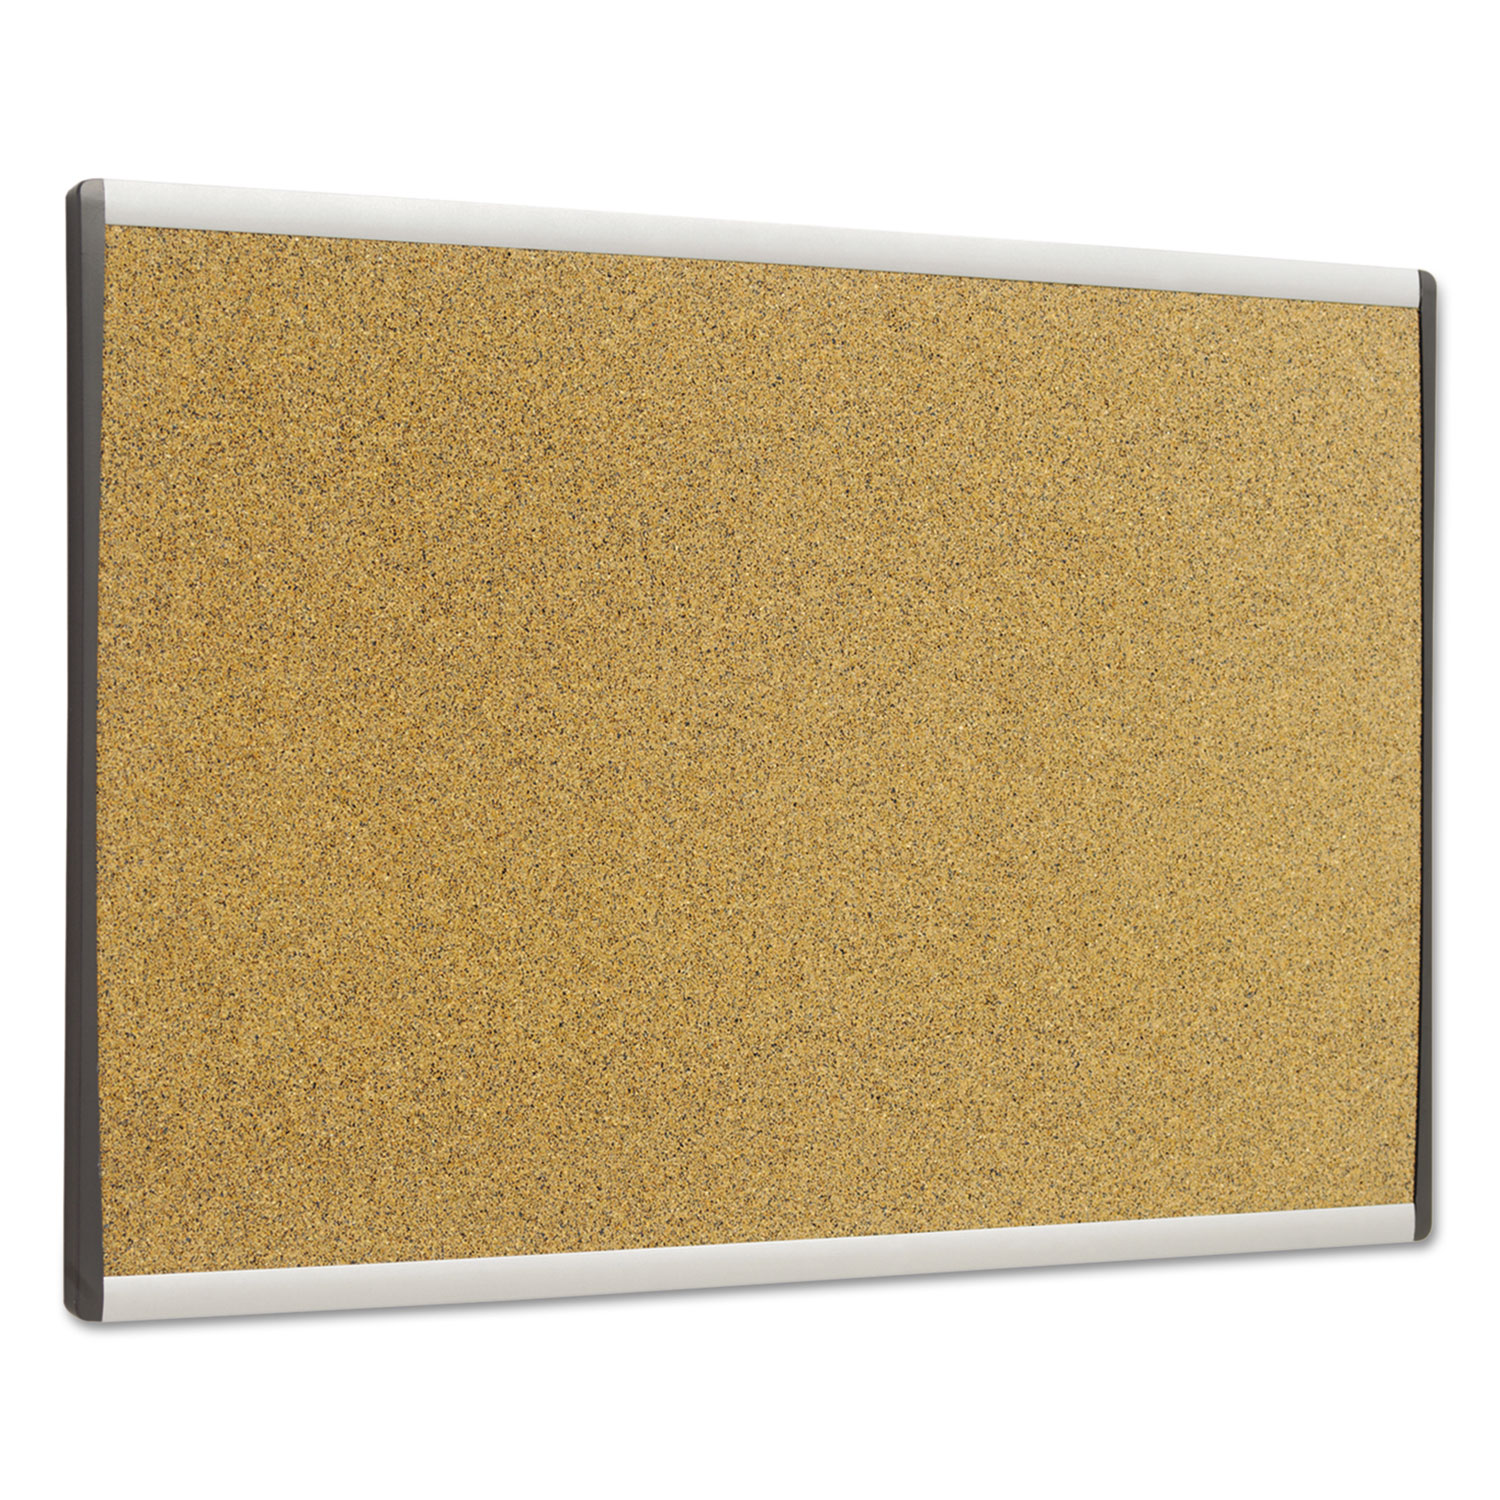 ARC Frame Cork Cubicle Board, 14 x 24, Tan, Aluminum Frame